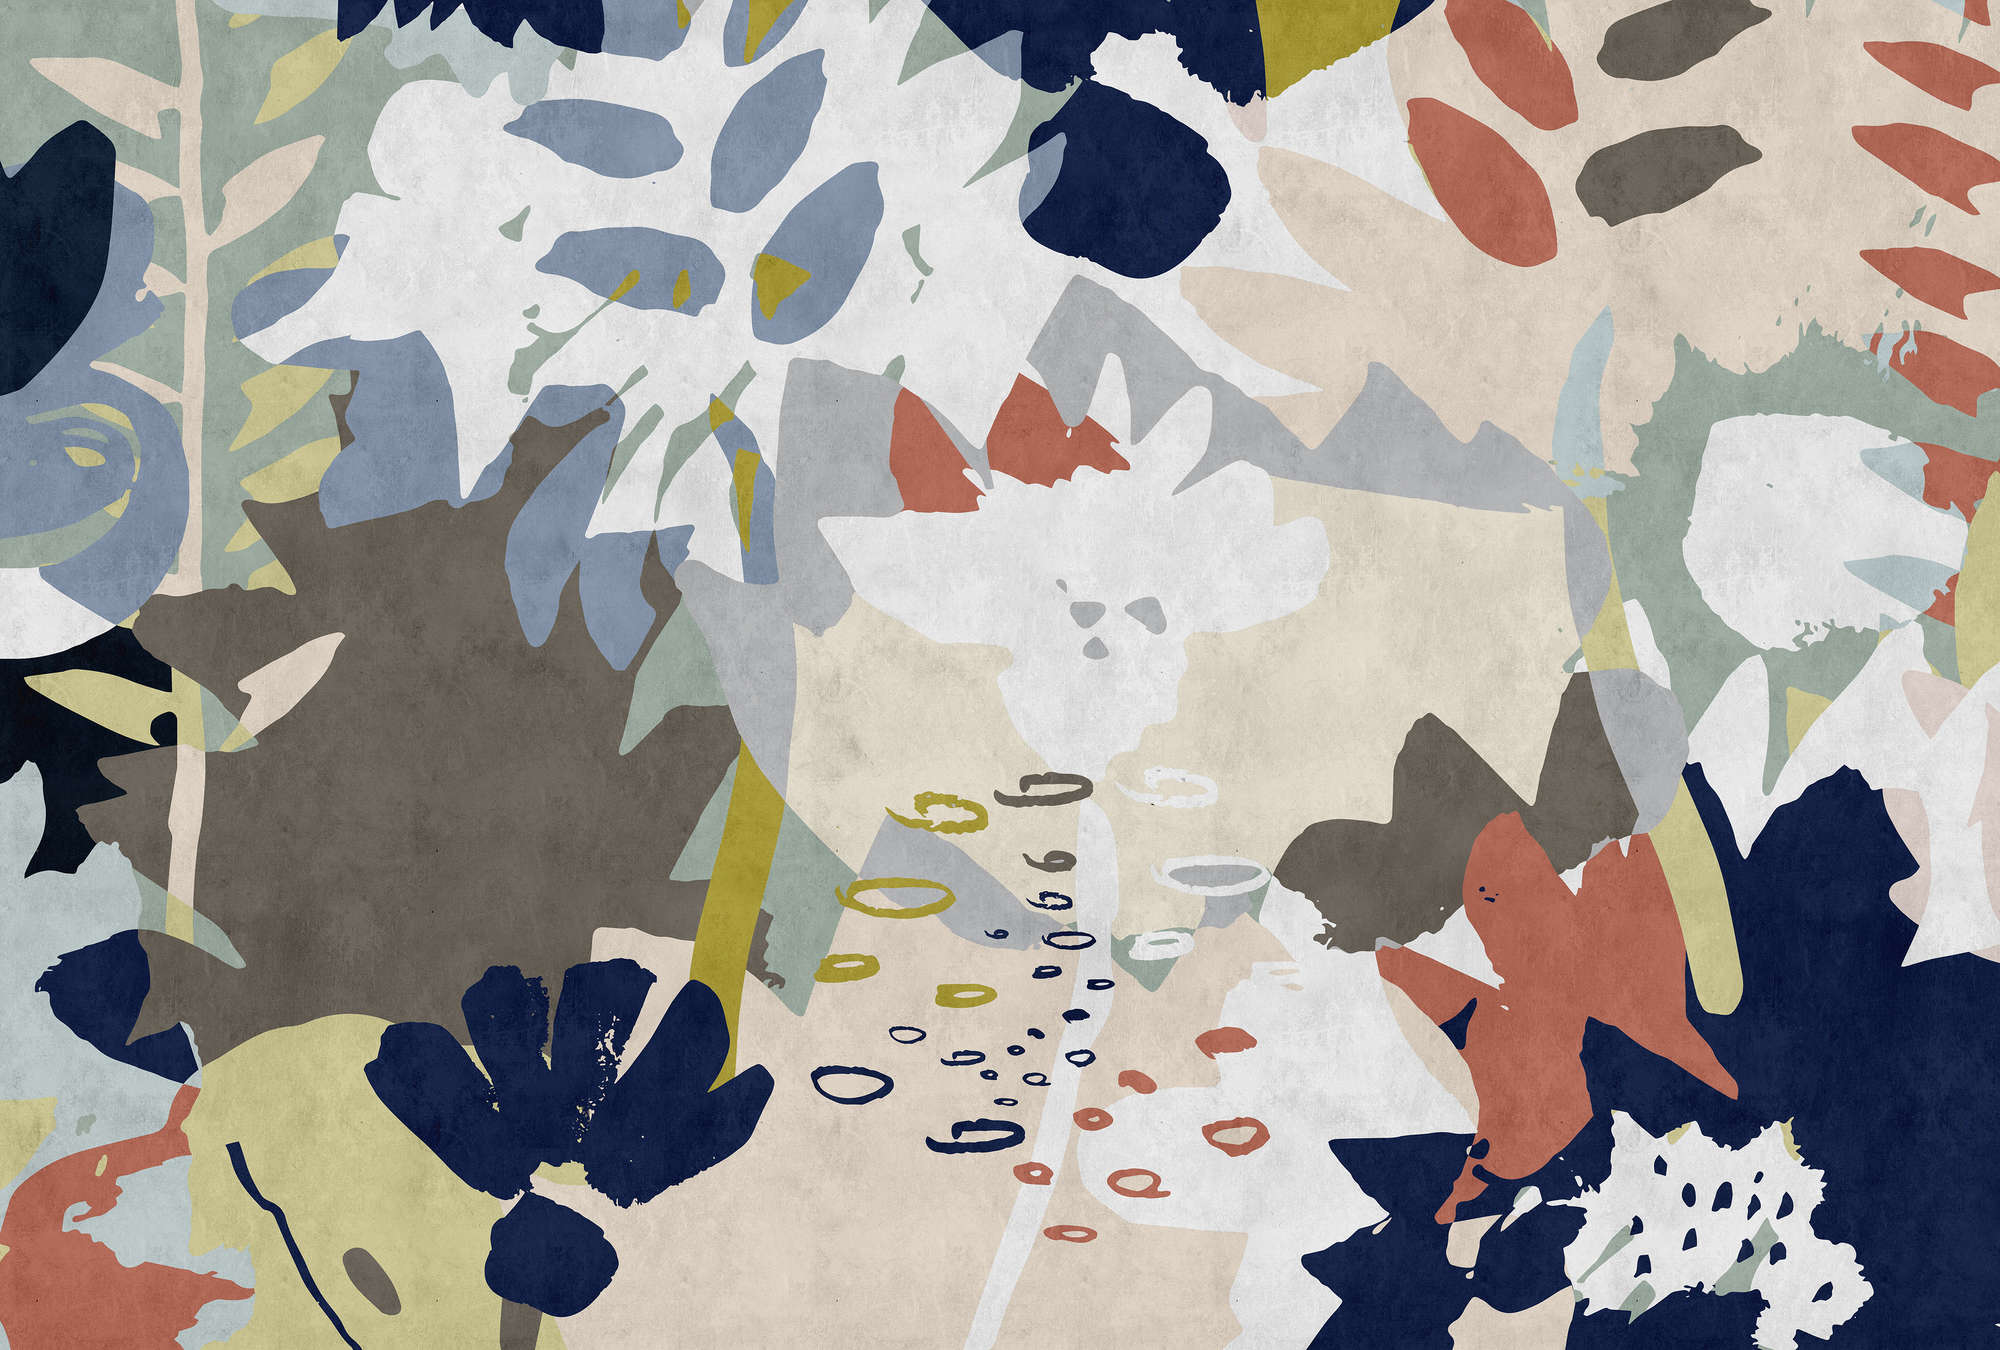             Floral Collage 4 - Colourful leaf motif wallpaper - Blotting paper structure - Blue, Brown | Matt smooth fleece
        